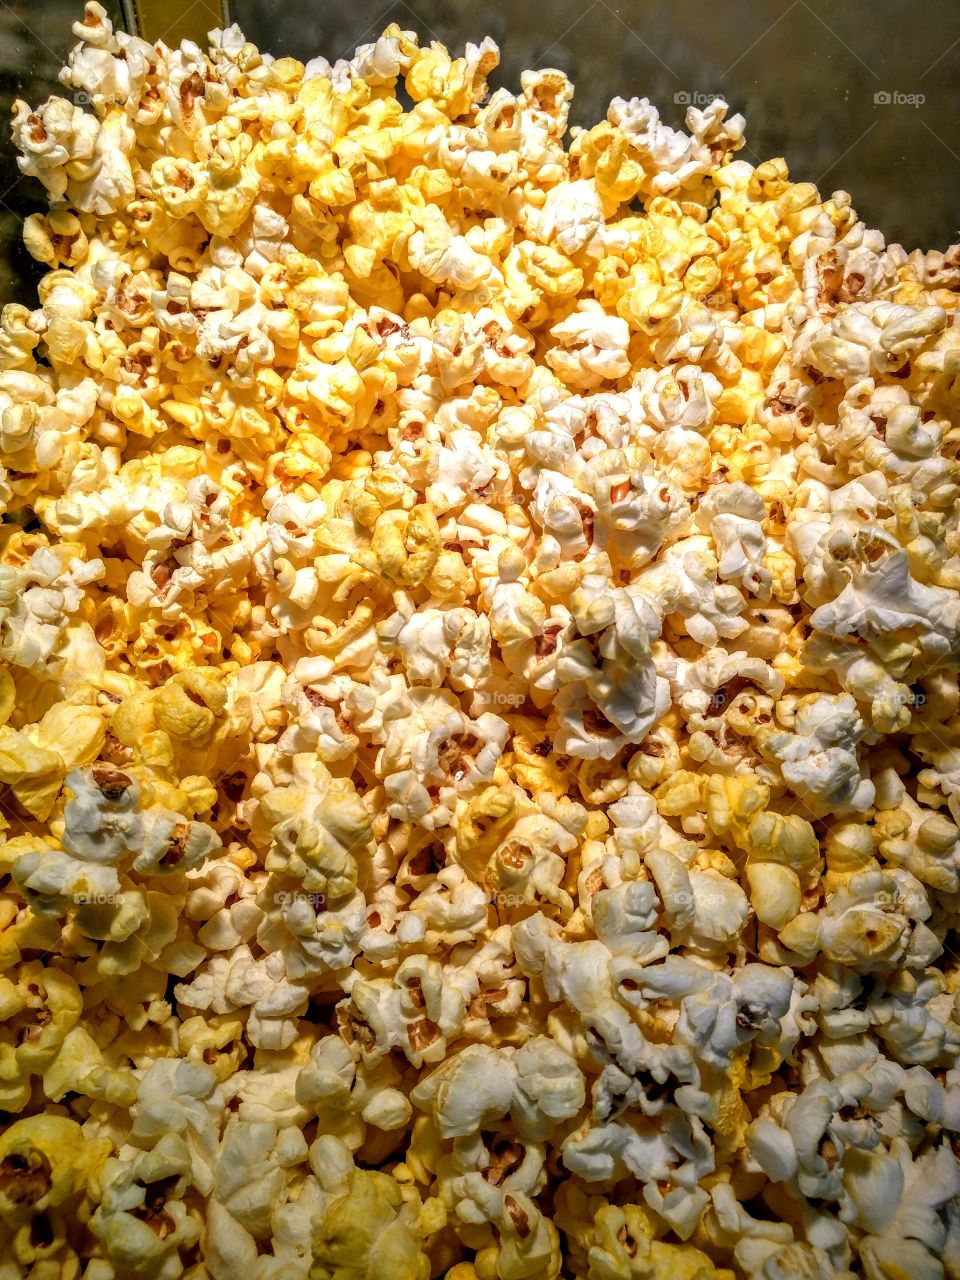 Buttered popcorn, YUM!